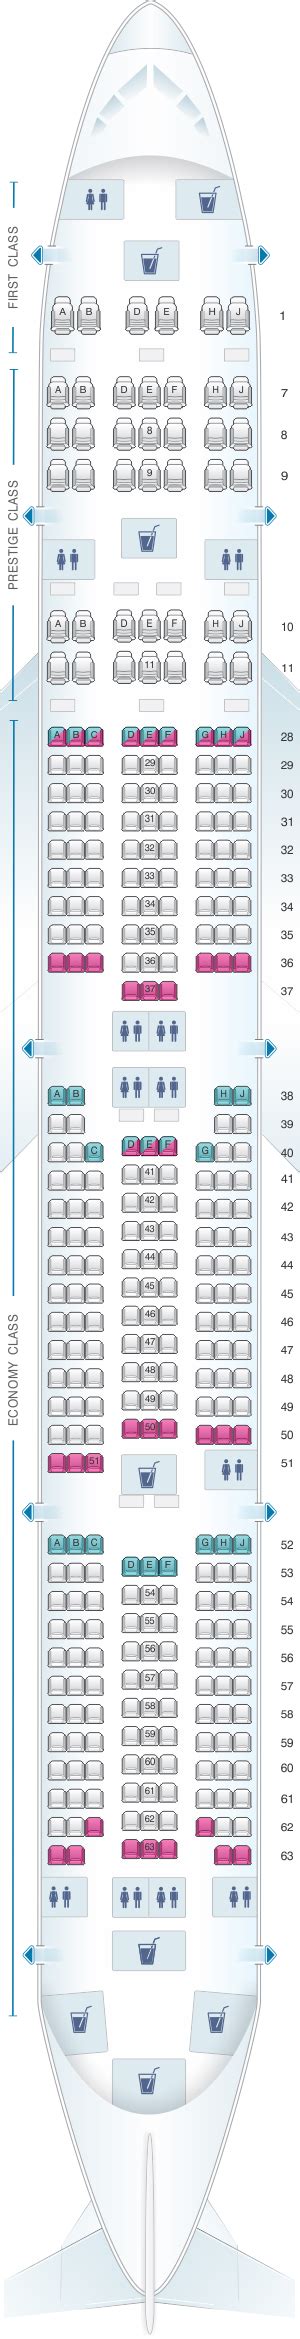 Korean Air B777 300er Seat Map Sexiz Pix